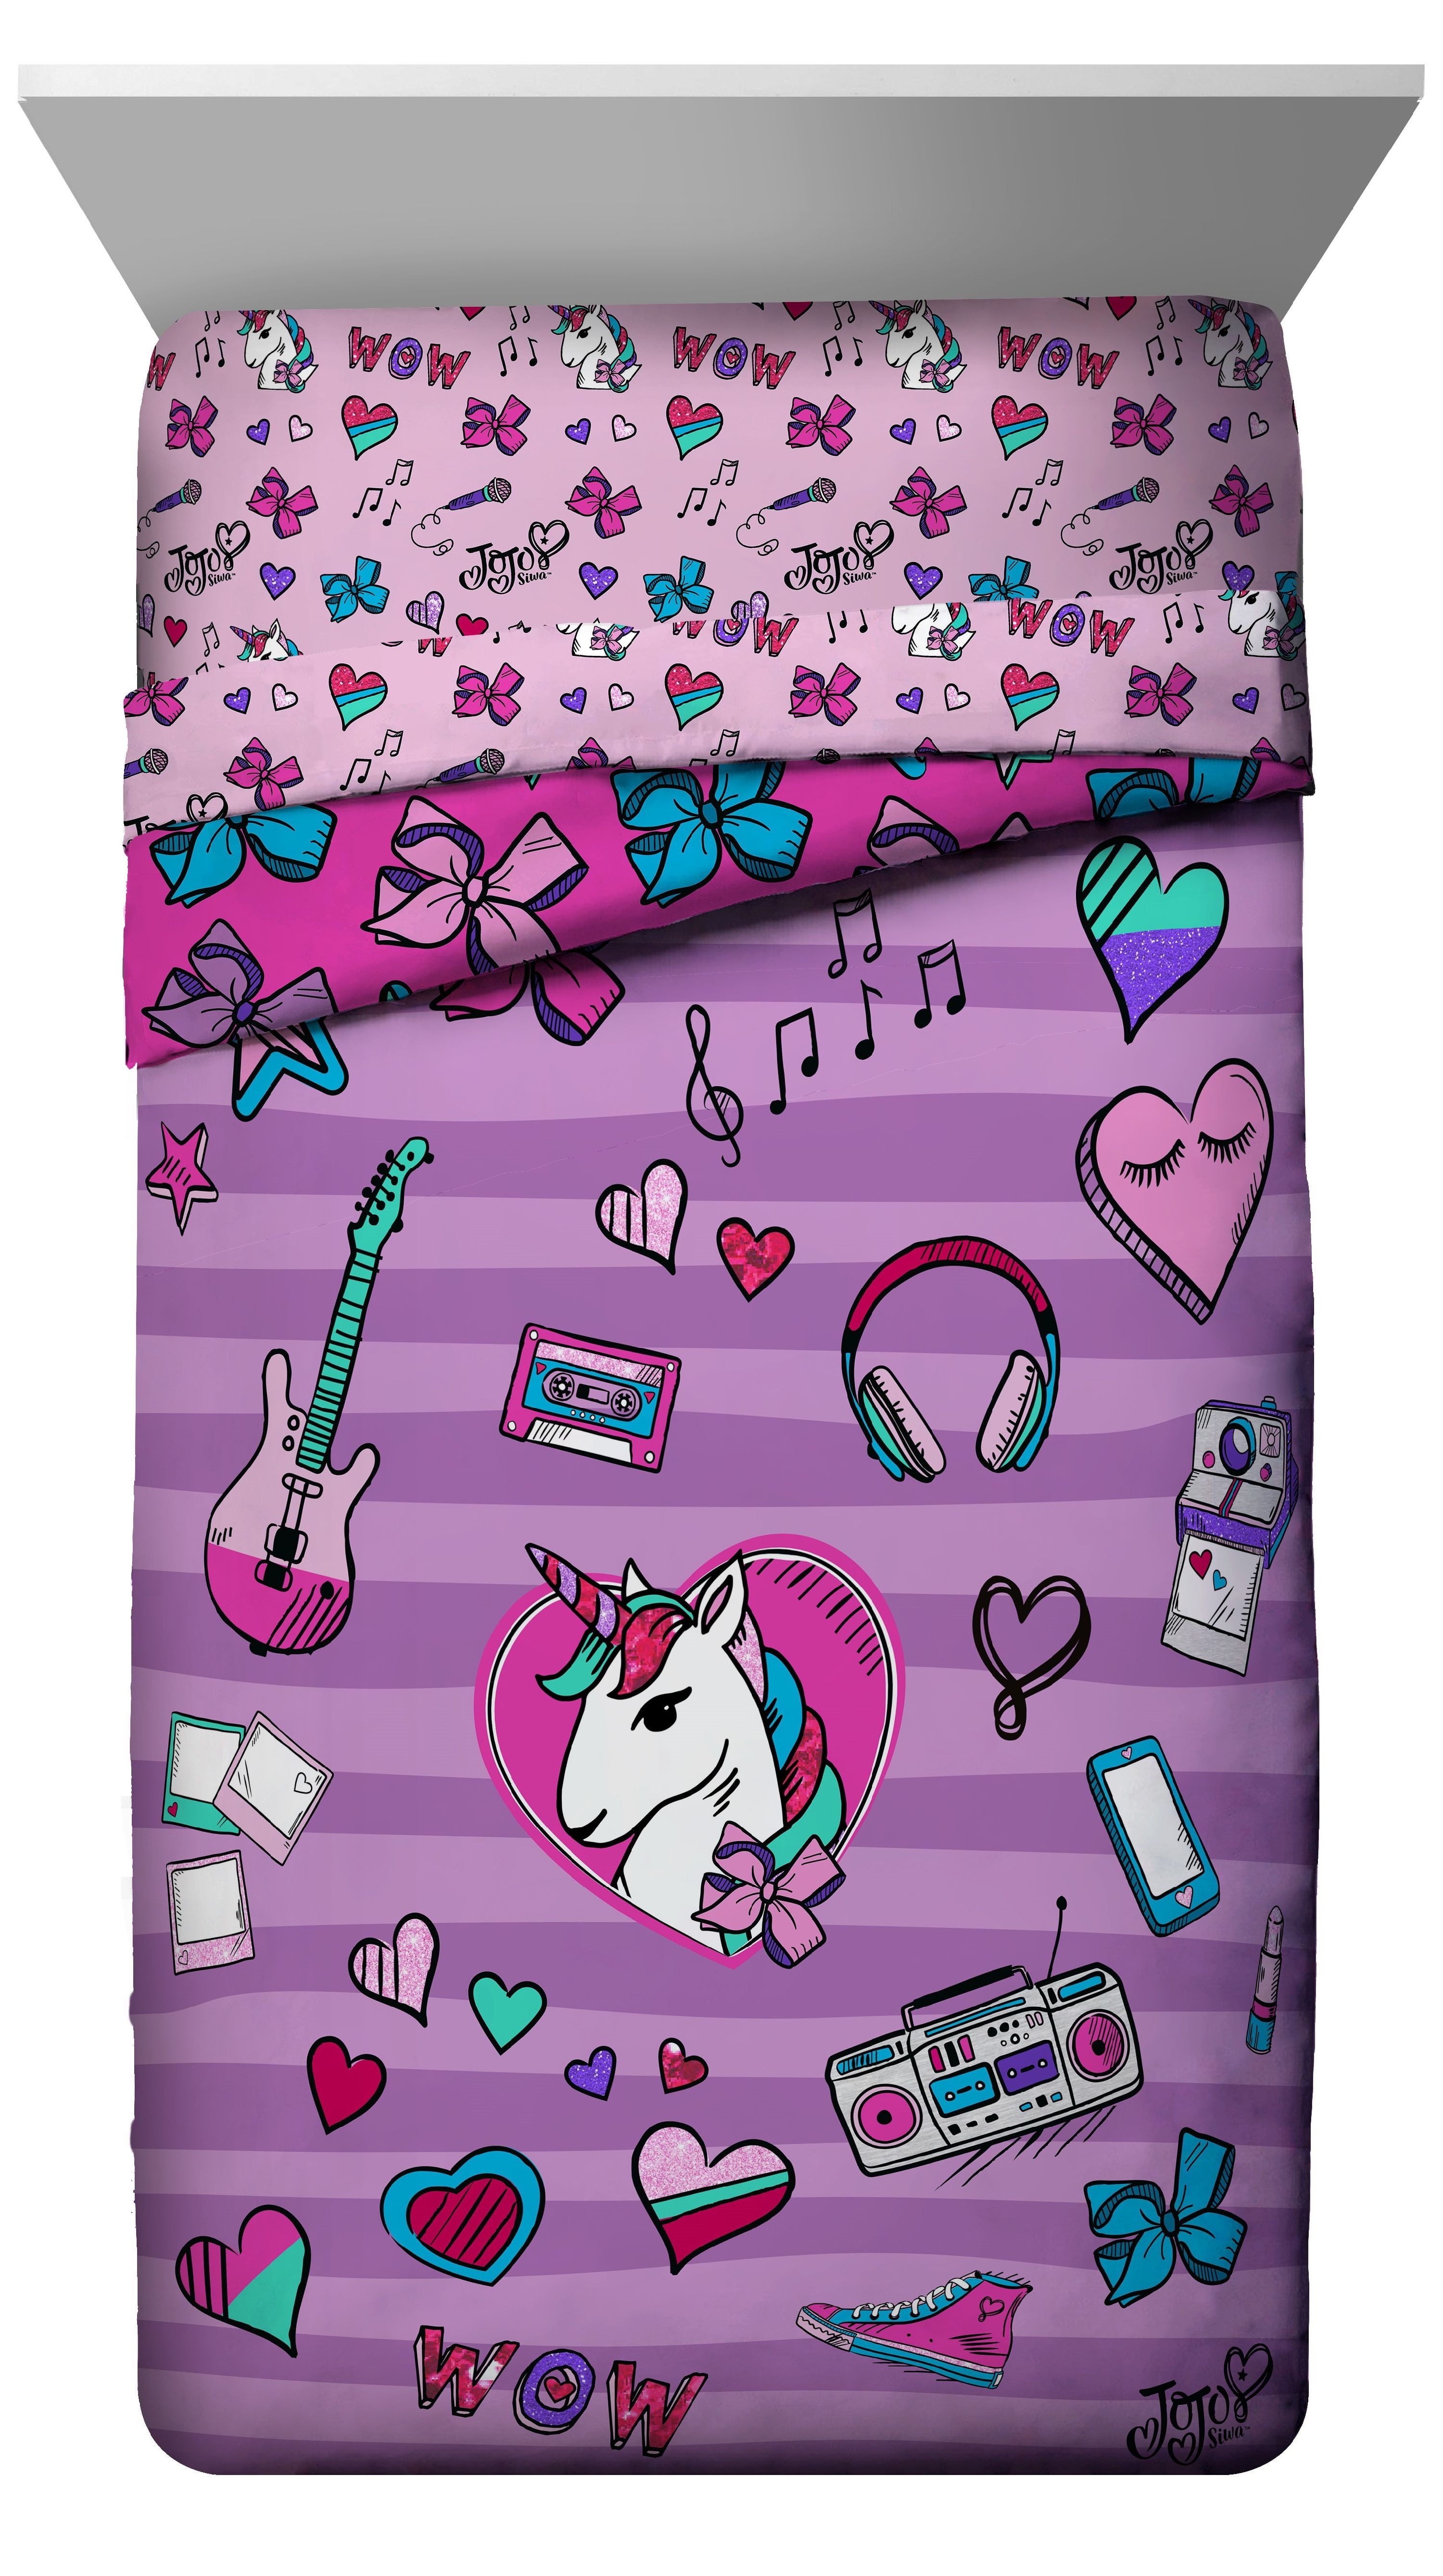 Details about   Jojo Siwa Twin Bedspread/Comforter Includes BONUS SHAM Reversible Rainbow 72x86” 